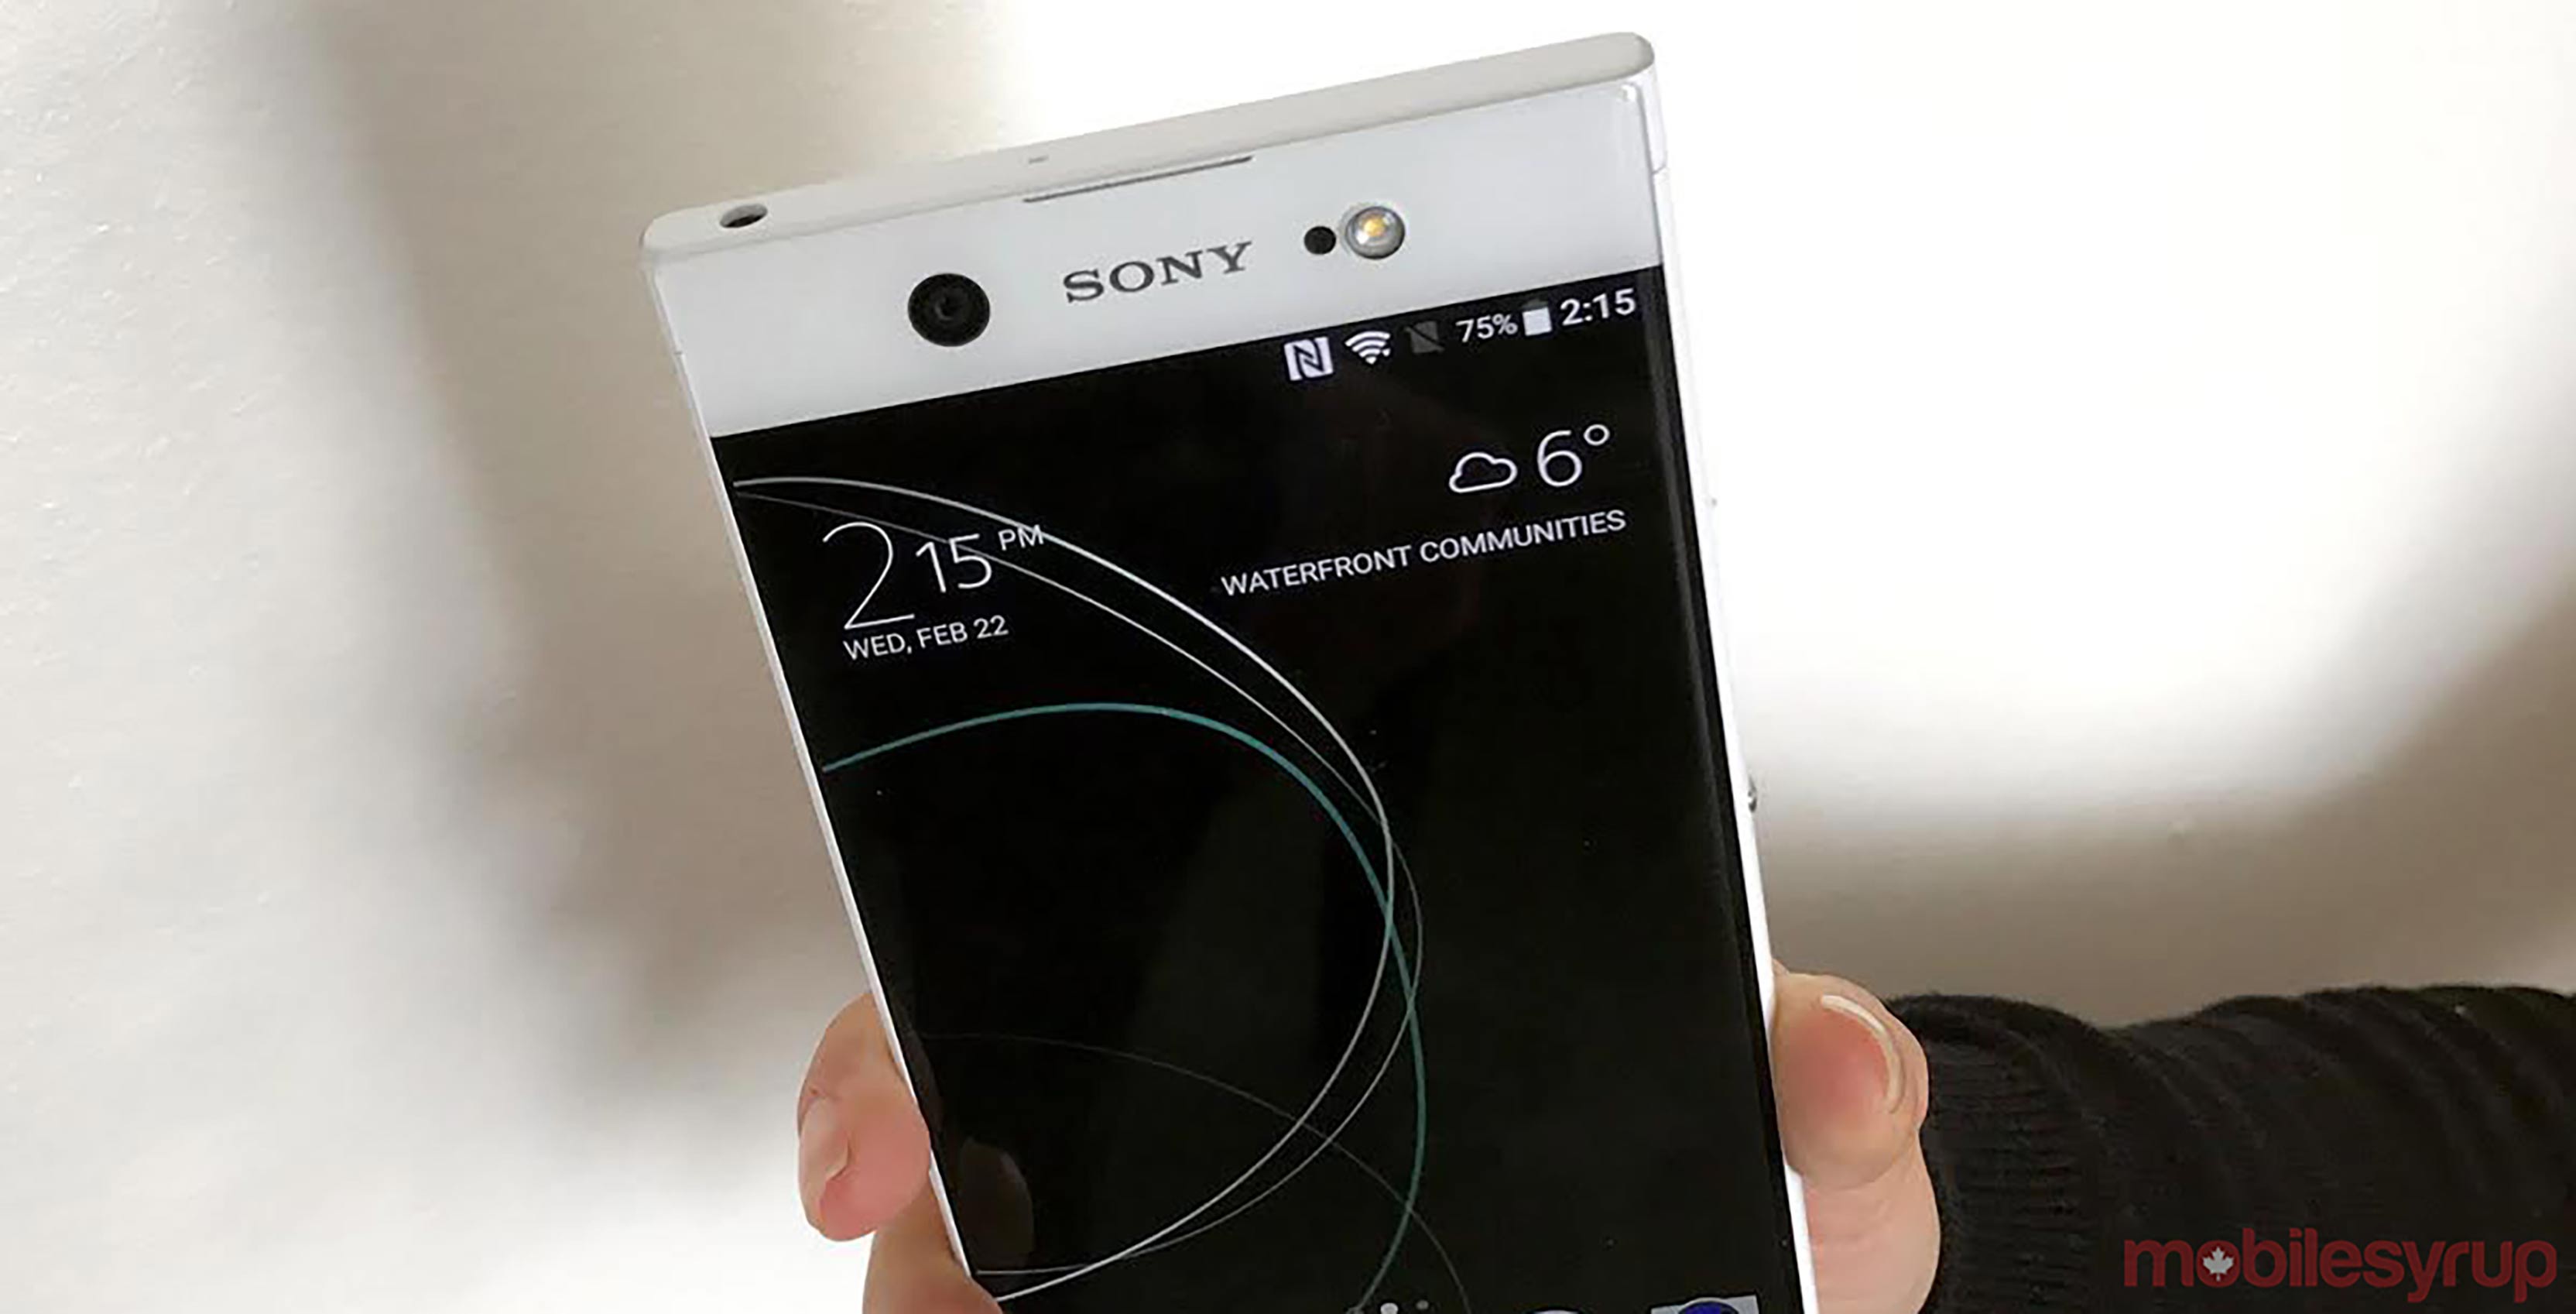 Sony Xperia XA1 Ultra in hand